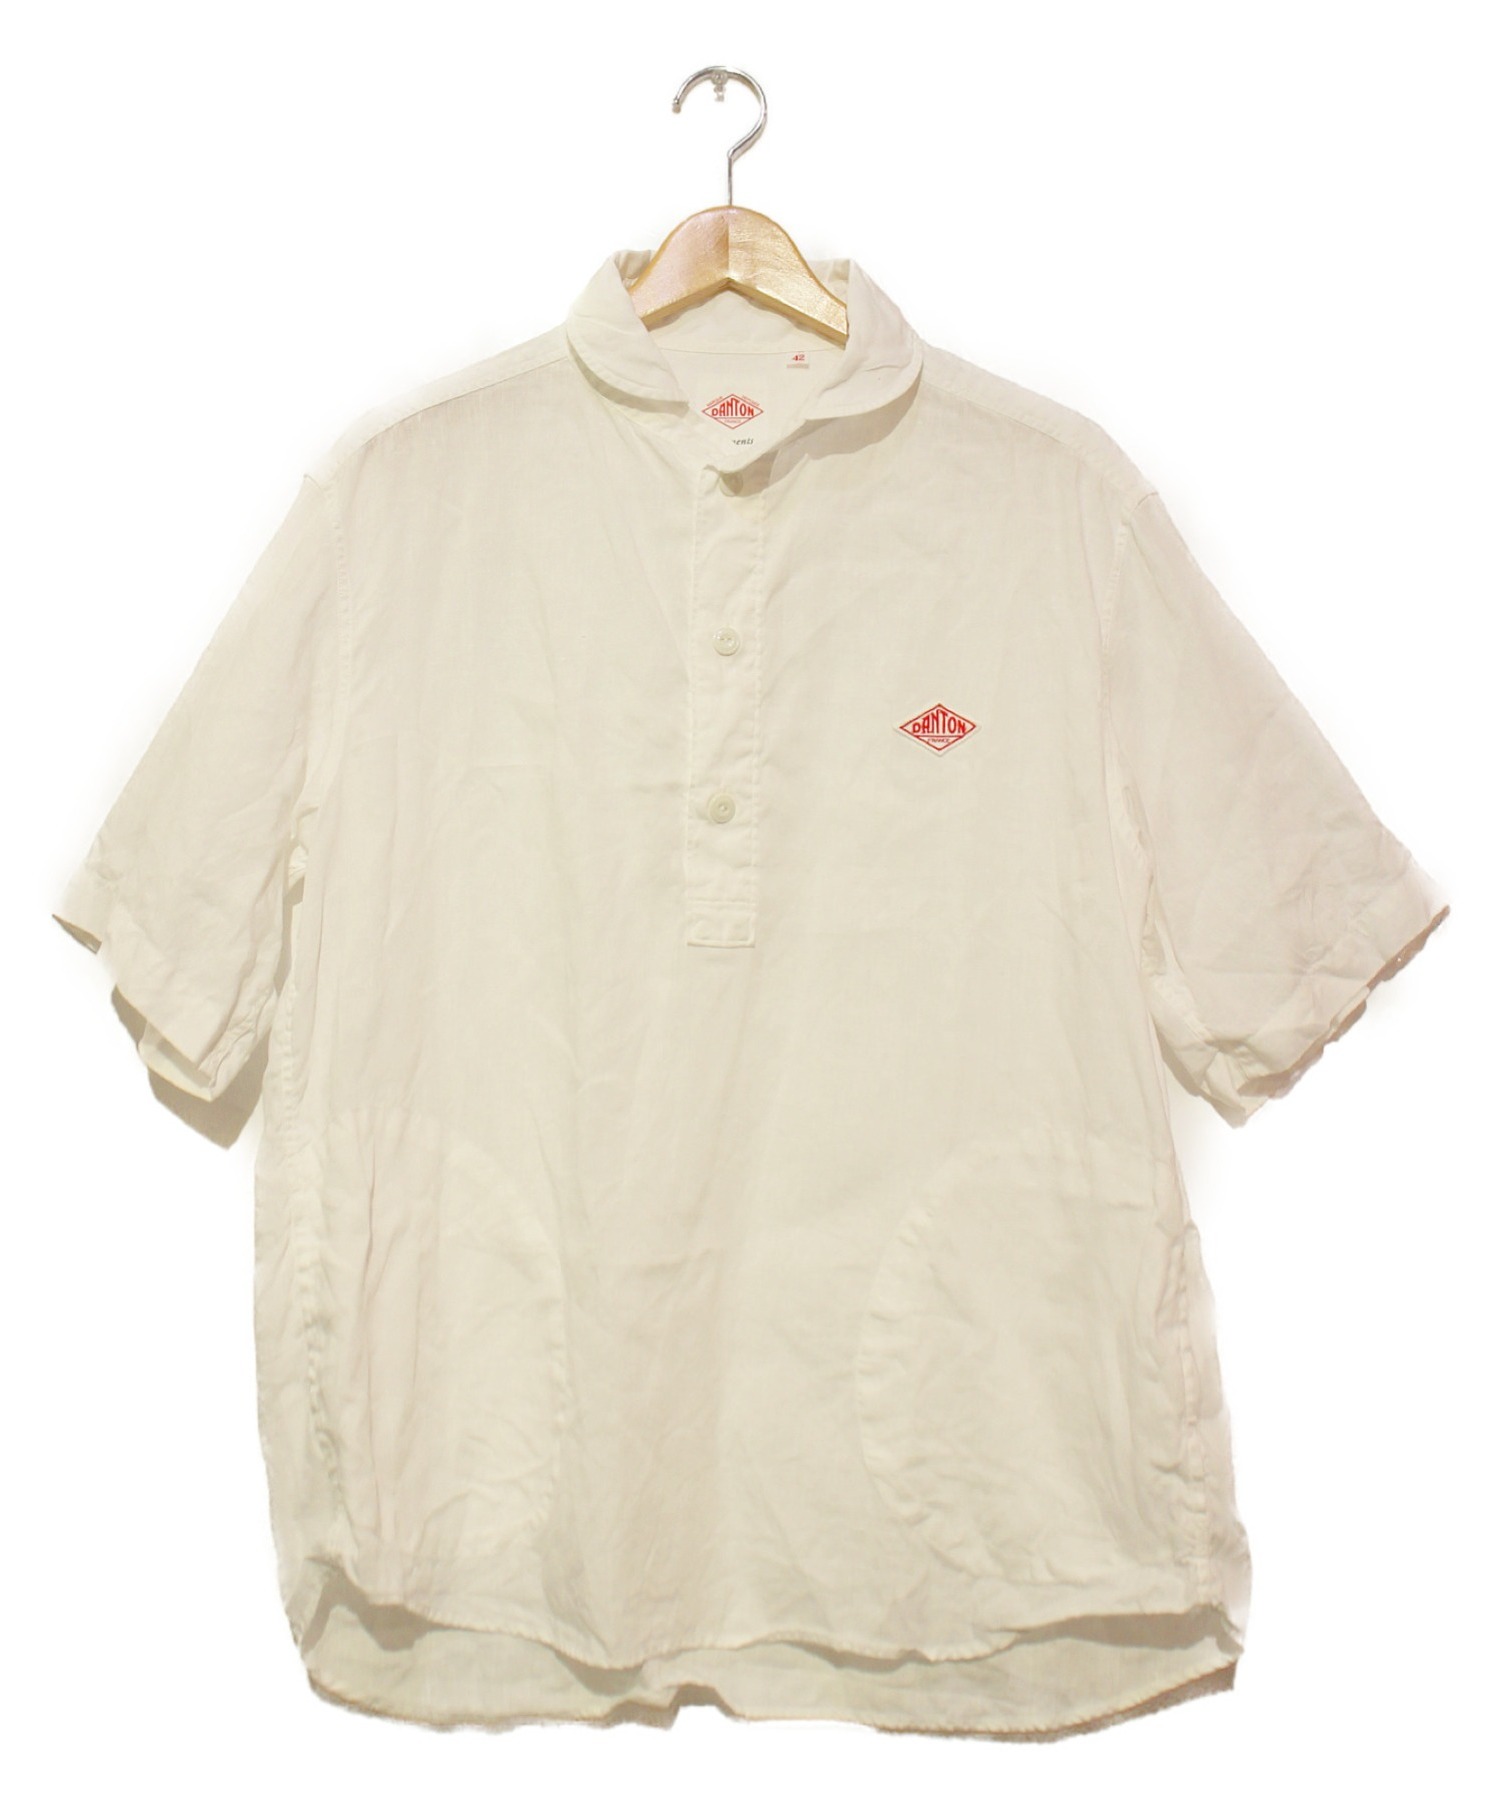 DANTON (ダントン) リネンクロス 半袖プルオーバーシャツ ホワイト サイズ:42 JD-3569 KLS LINEN CLOTH SHIRTS